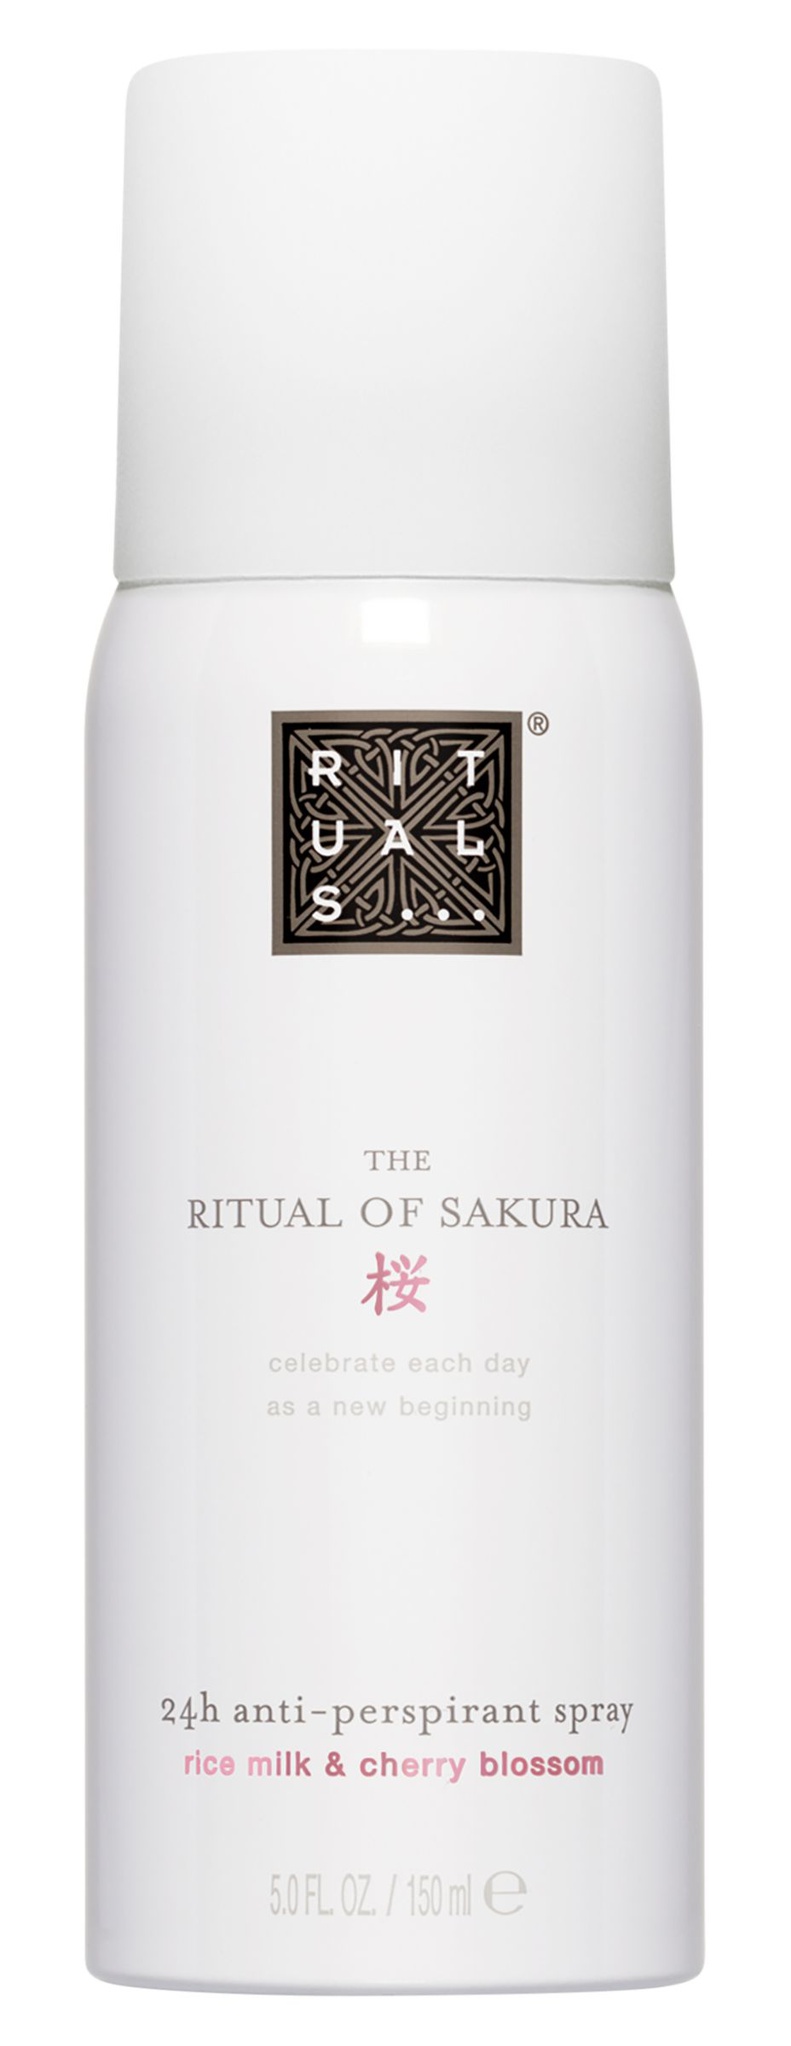 RITUALS The Ritual Of Sakura Anti-Perspirant Spray